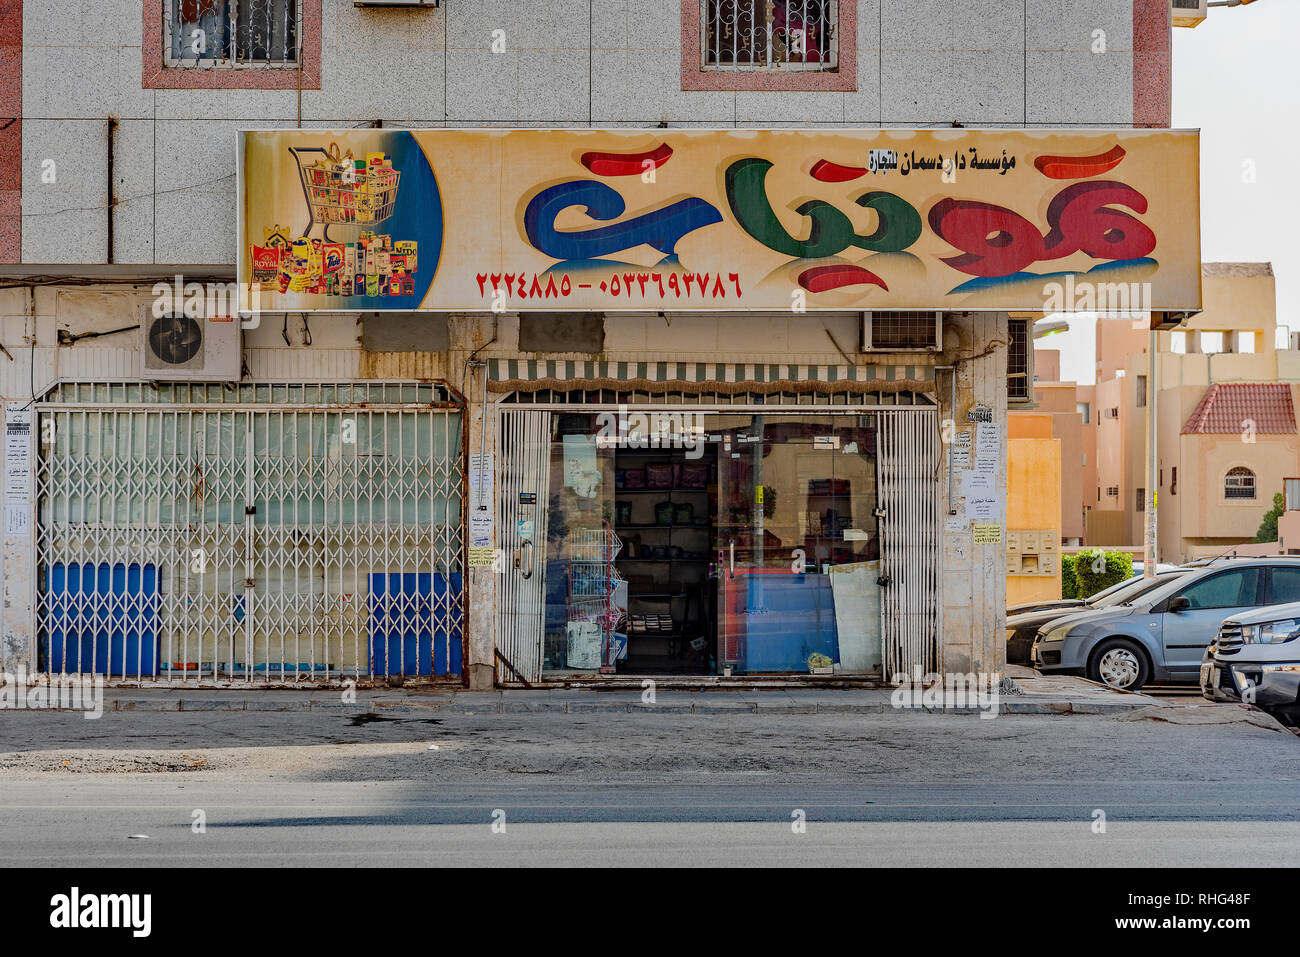 Neighbourhood corner store in Riyadh, Saudi Arabia Stock Photo